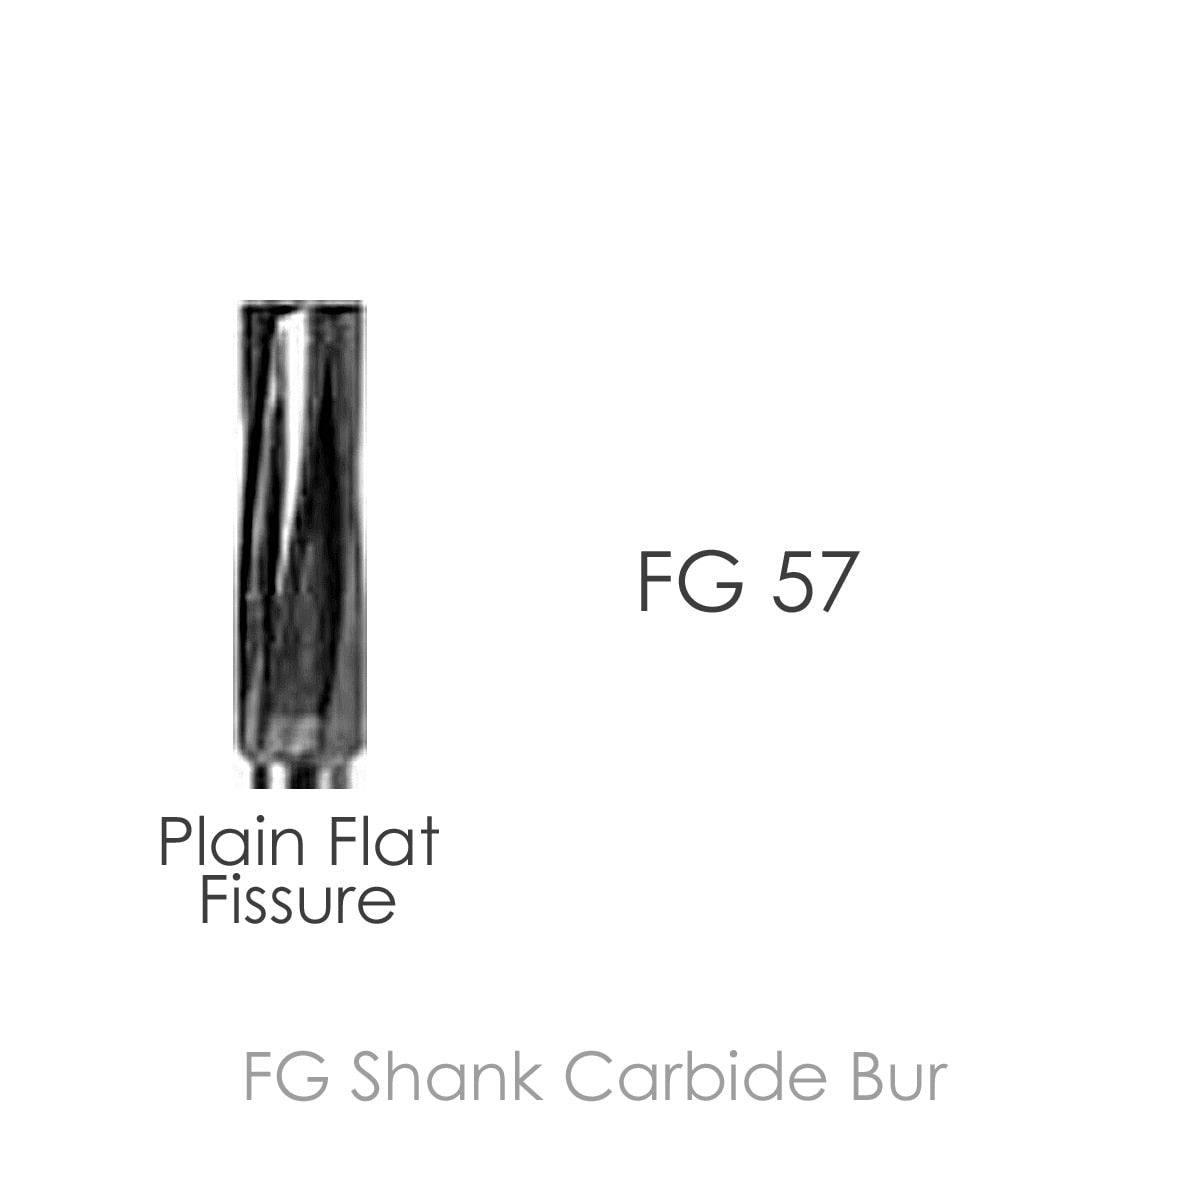 FG Shank Carbide Bur FG57, Plain Flat Fissure, 10pcs/Pack.